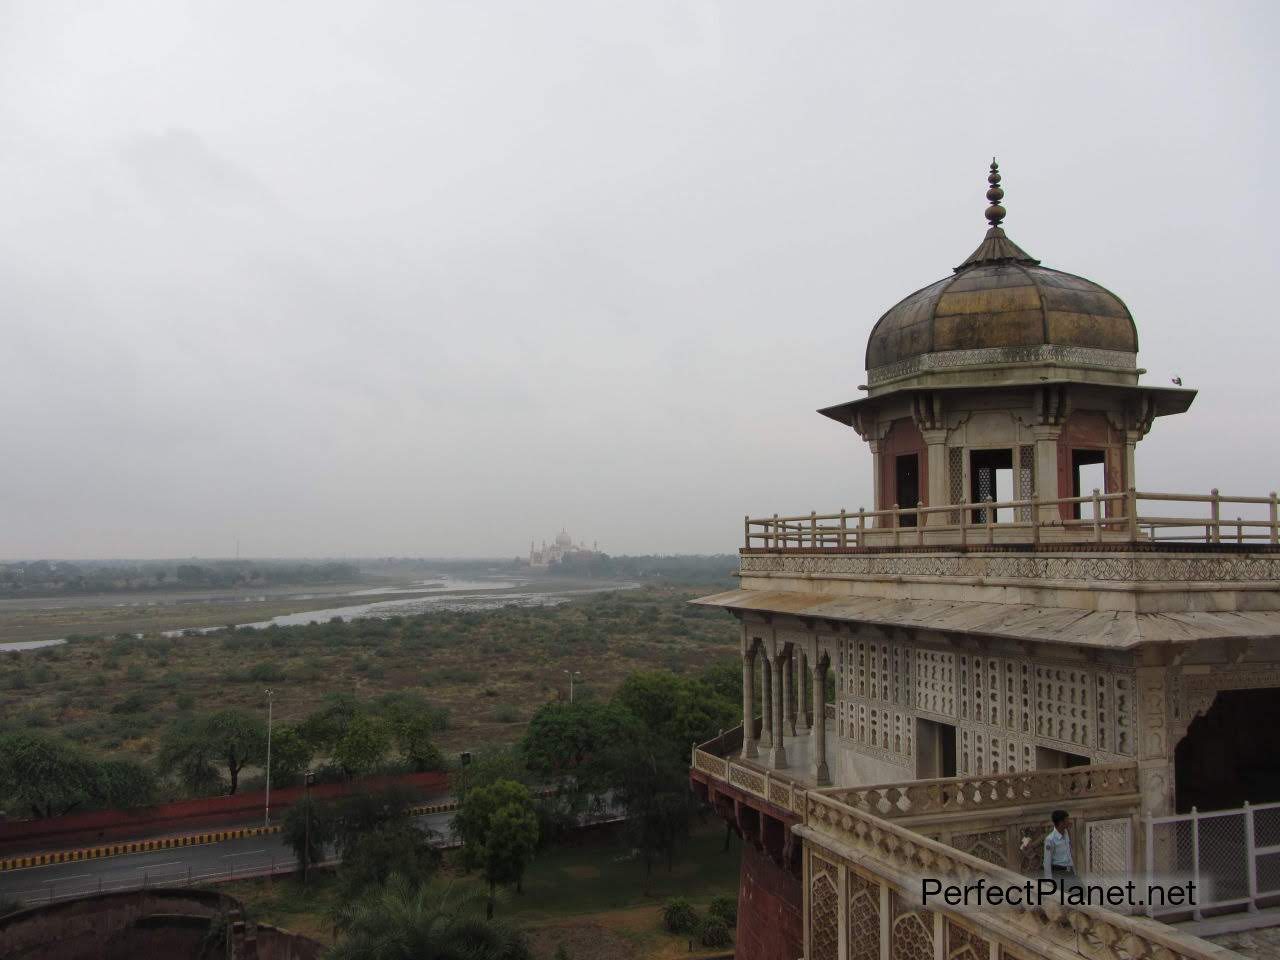 Views of the Taj Mahal